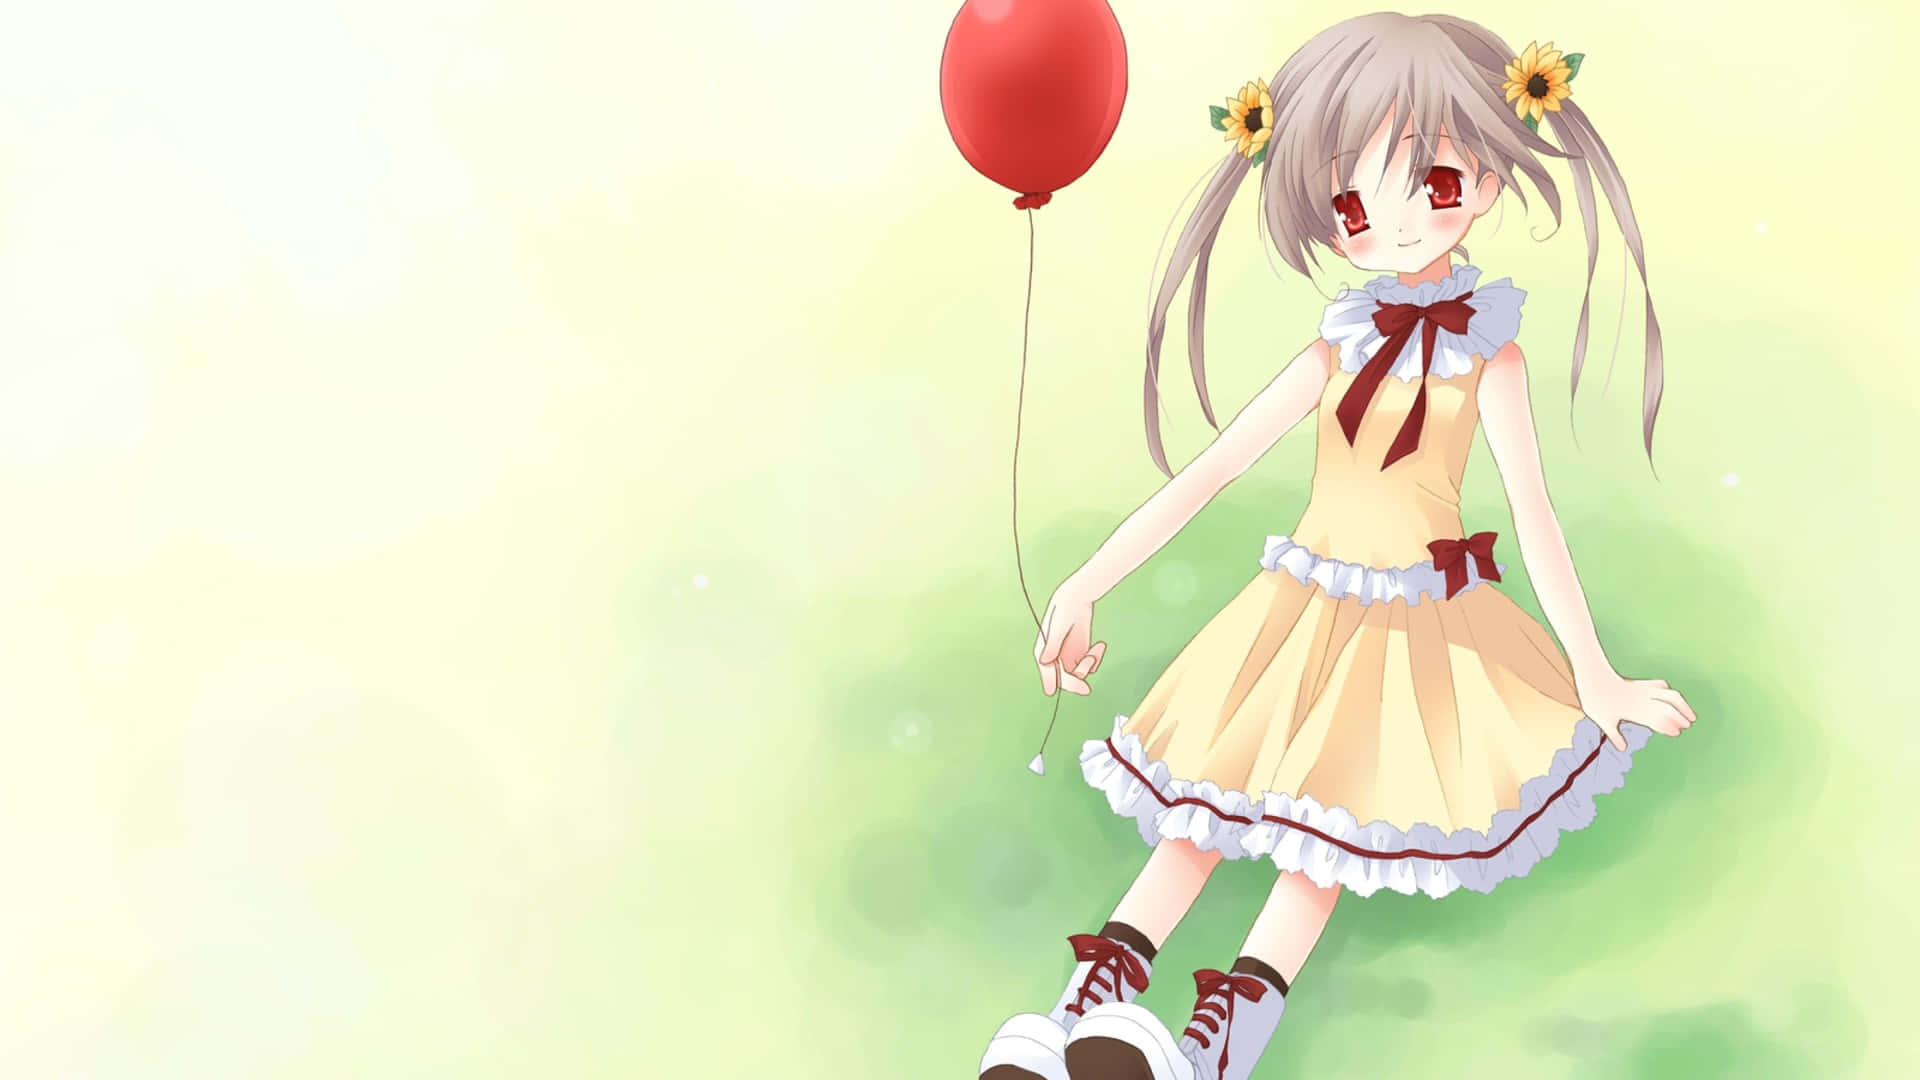 Girlwith Balloon Anime Art Wallpaper